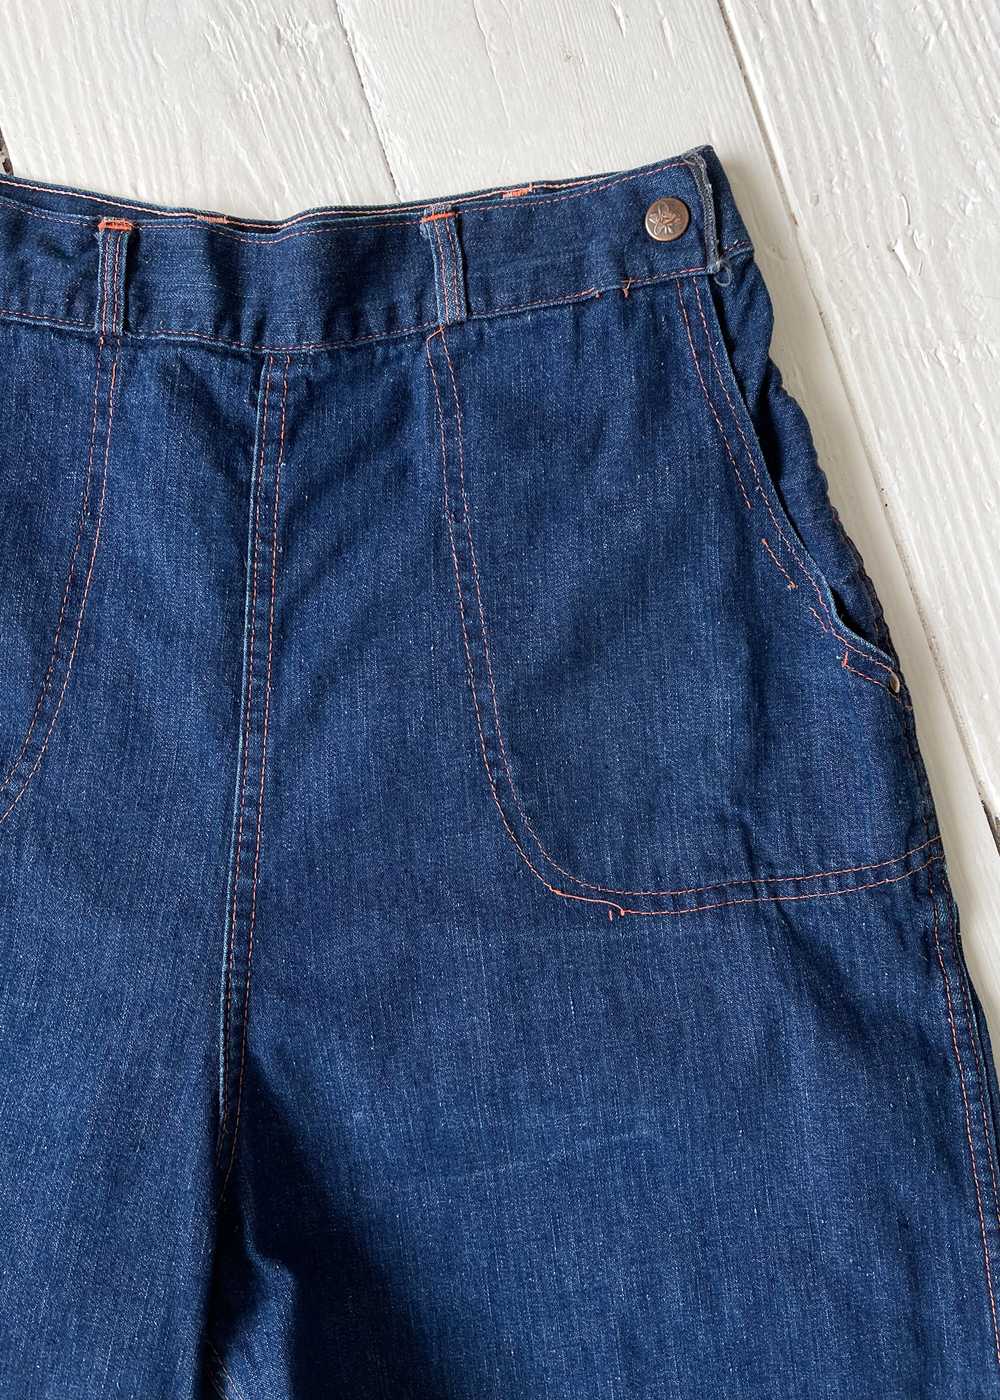 Vintage 1950s Side Zip Jeans - image 2